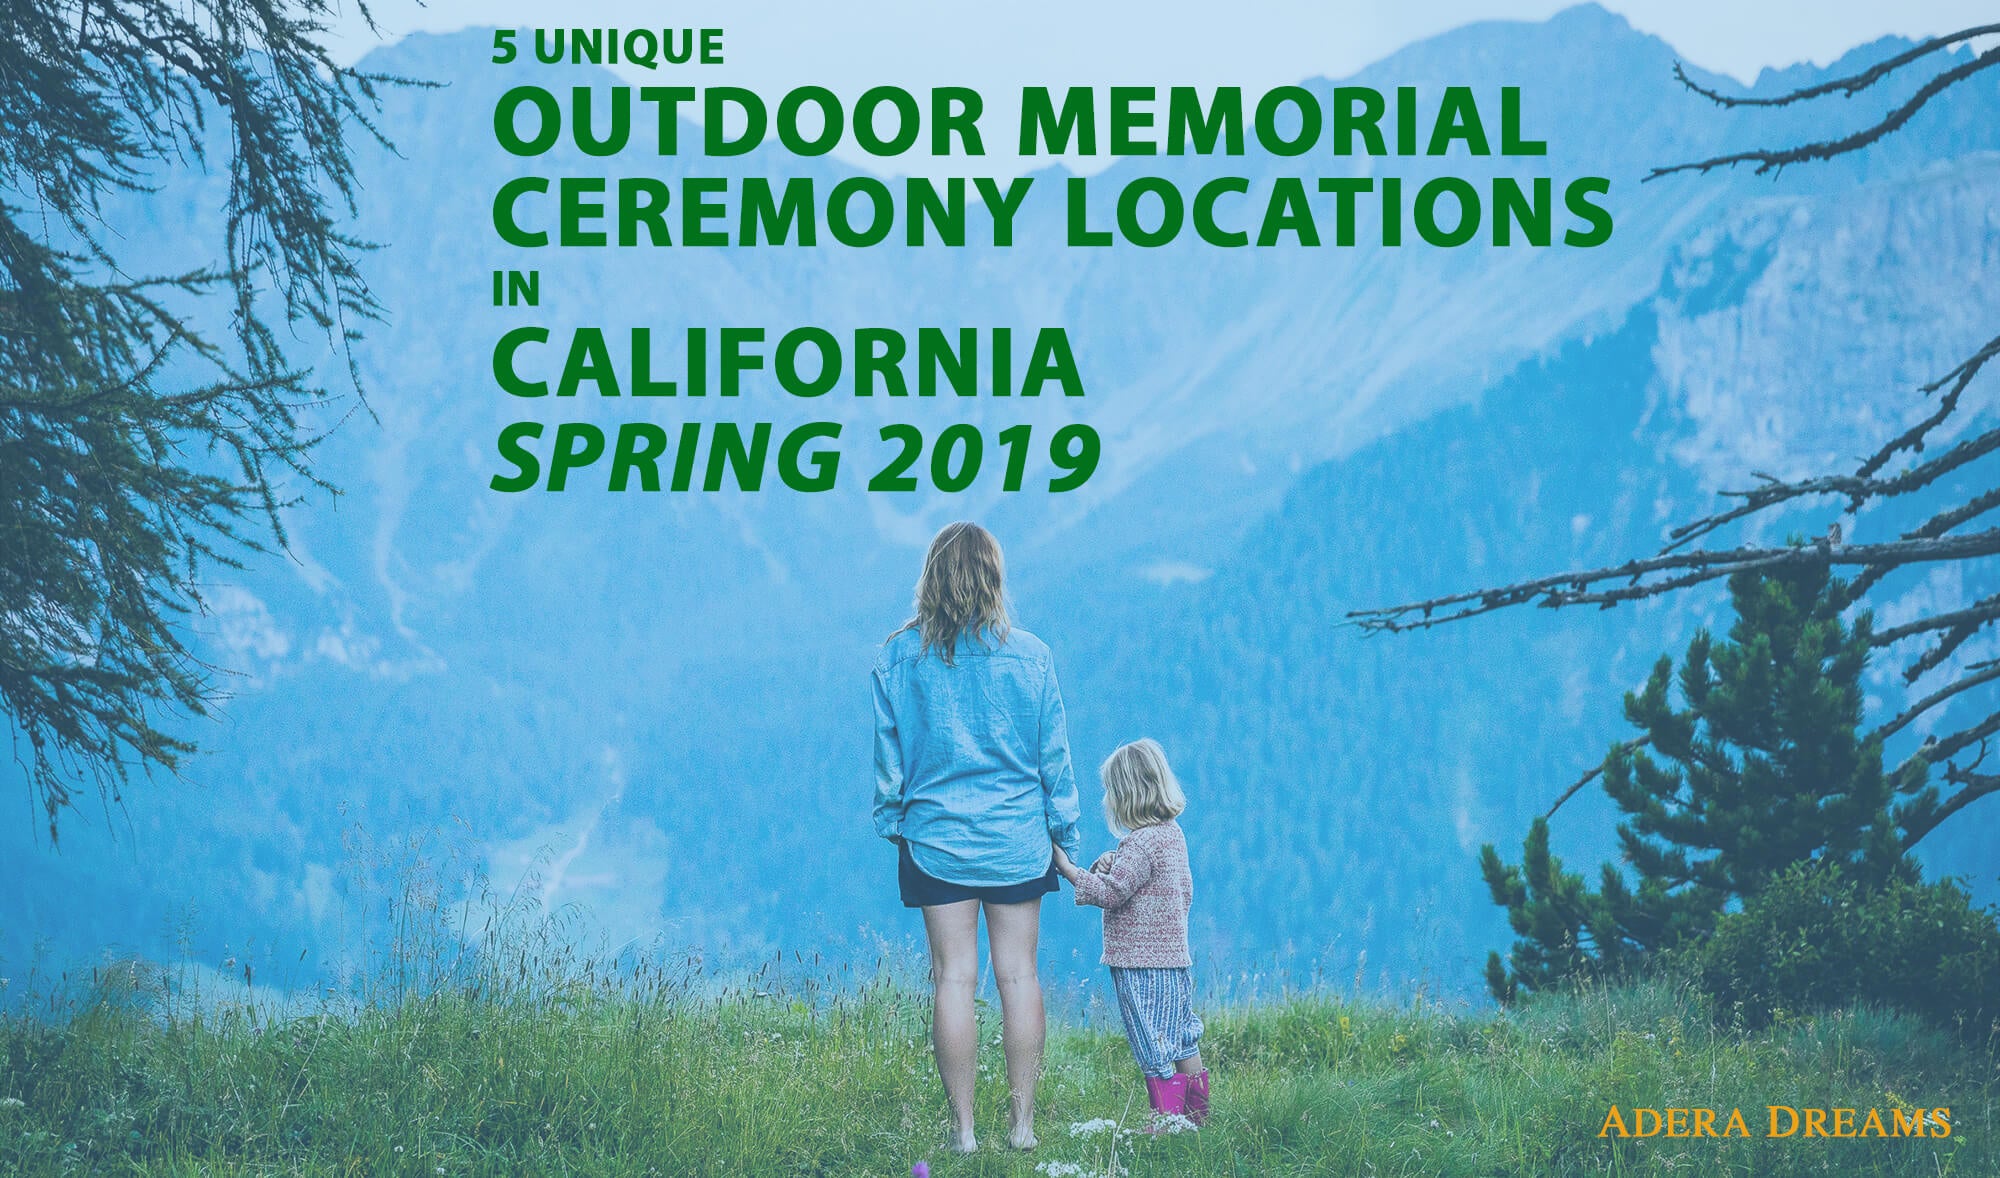 5 Unique Outdoor Memorial Ceremony Locations in California - Spring 2019